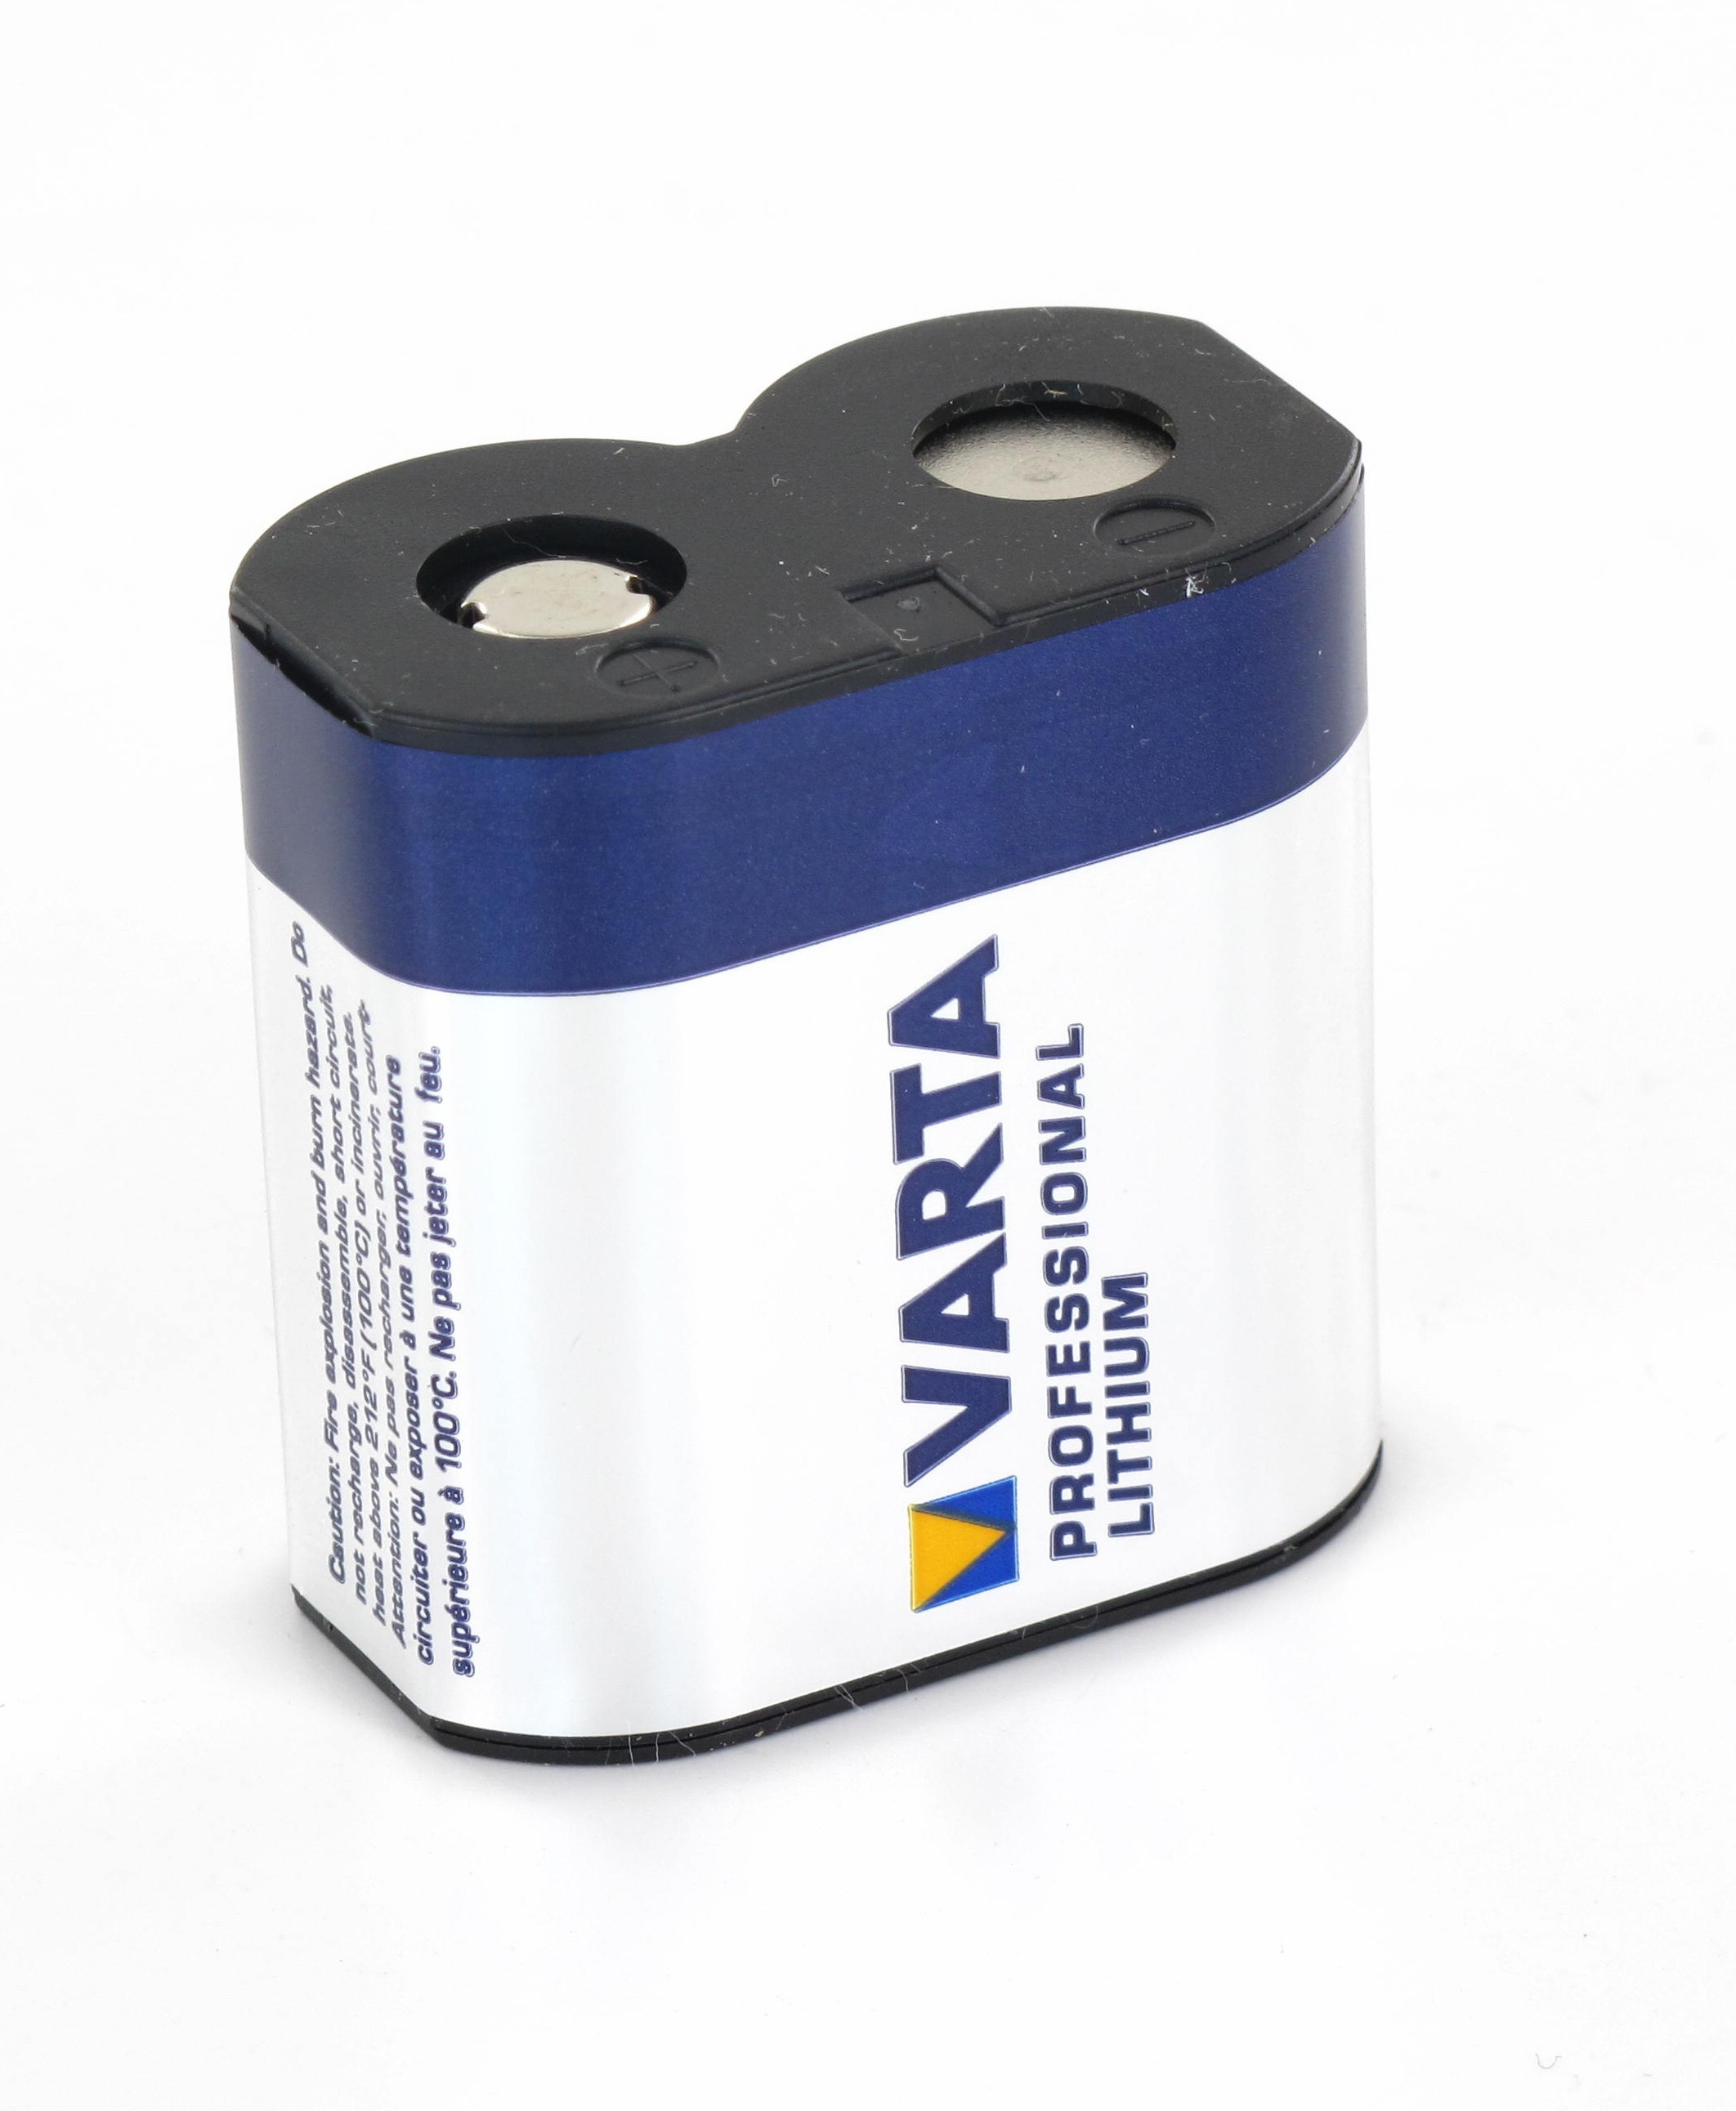 Pile Varta CR-P2 Professional Photo Lithium - batterie appareil photo